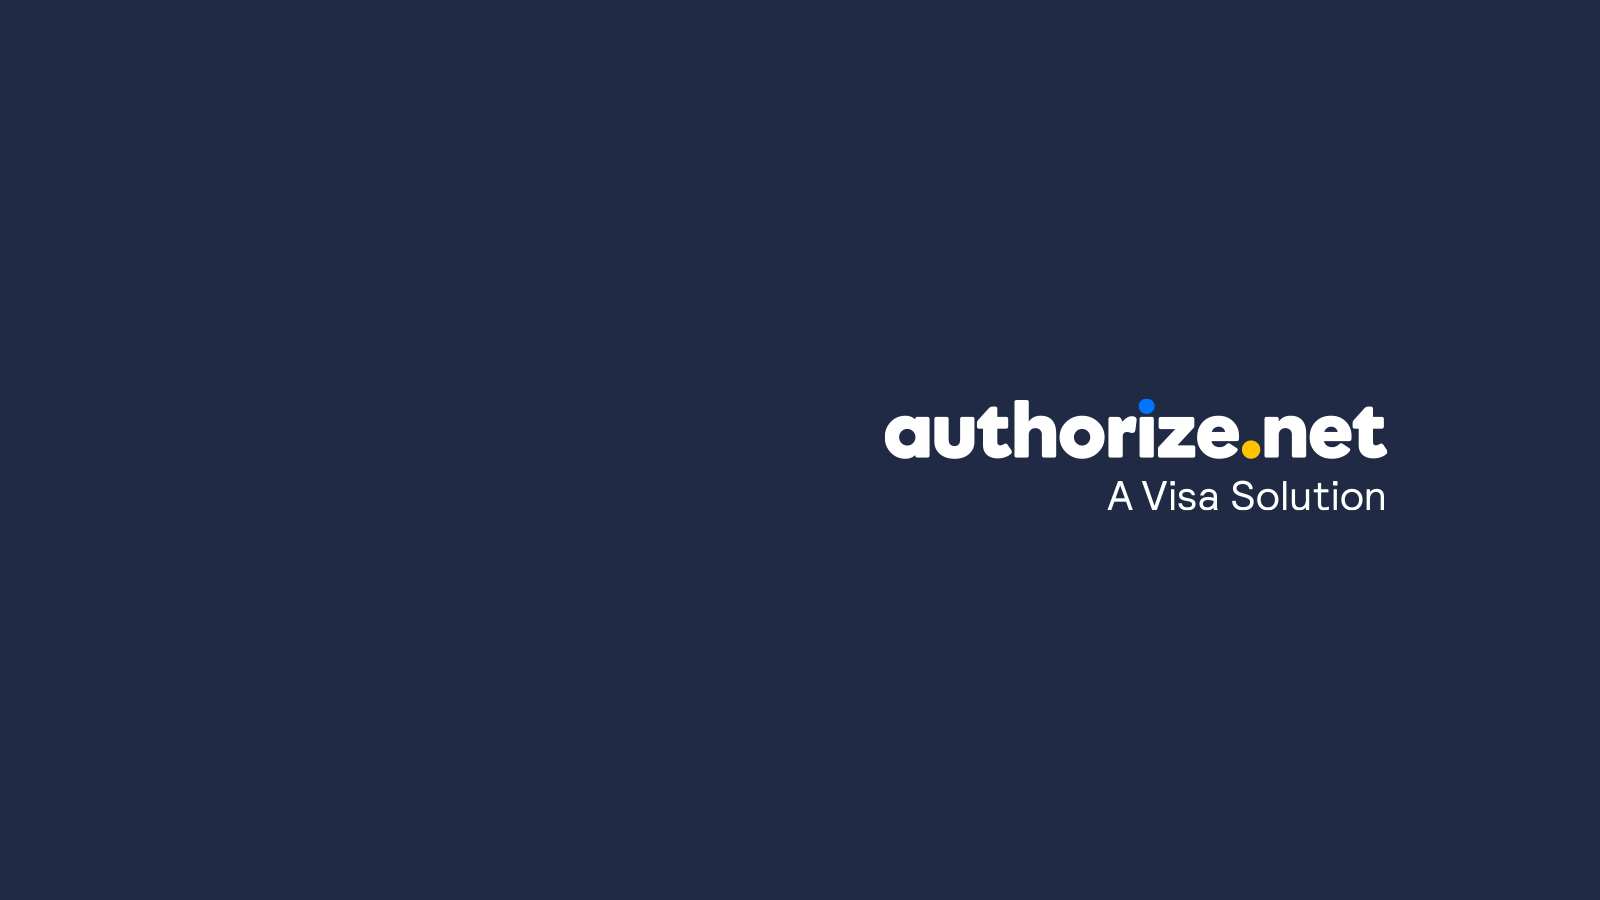 Authorize.net logo with the caption 